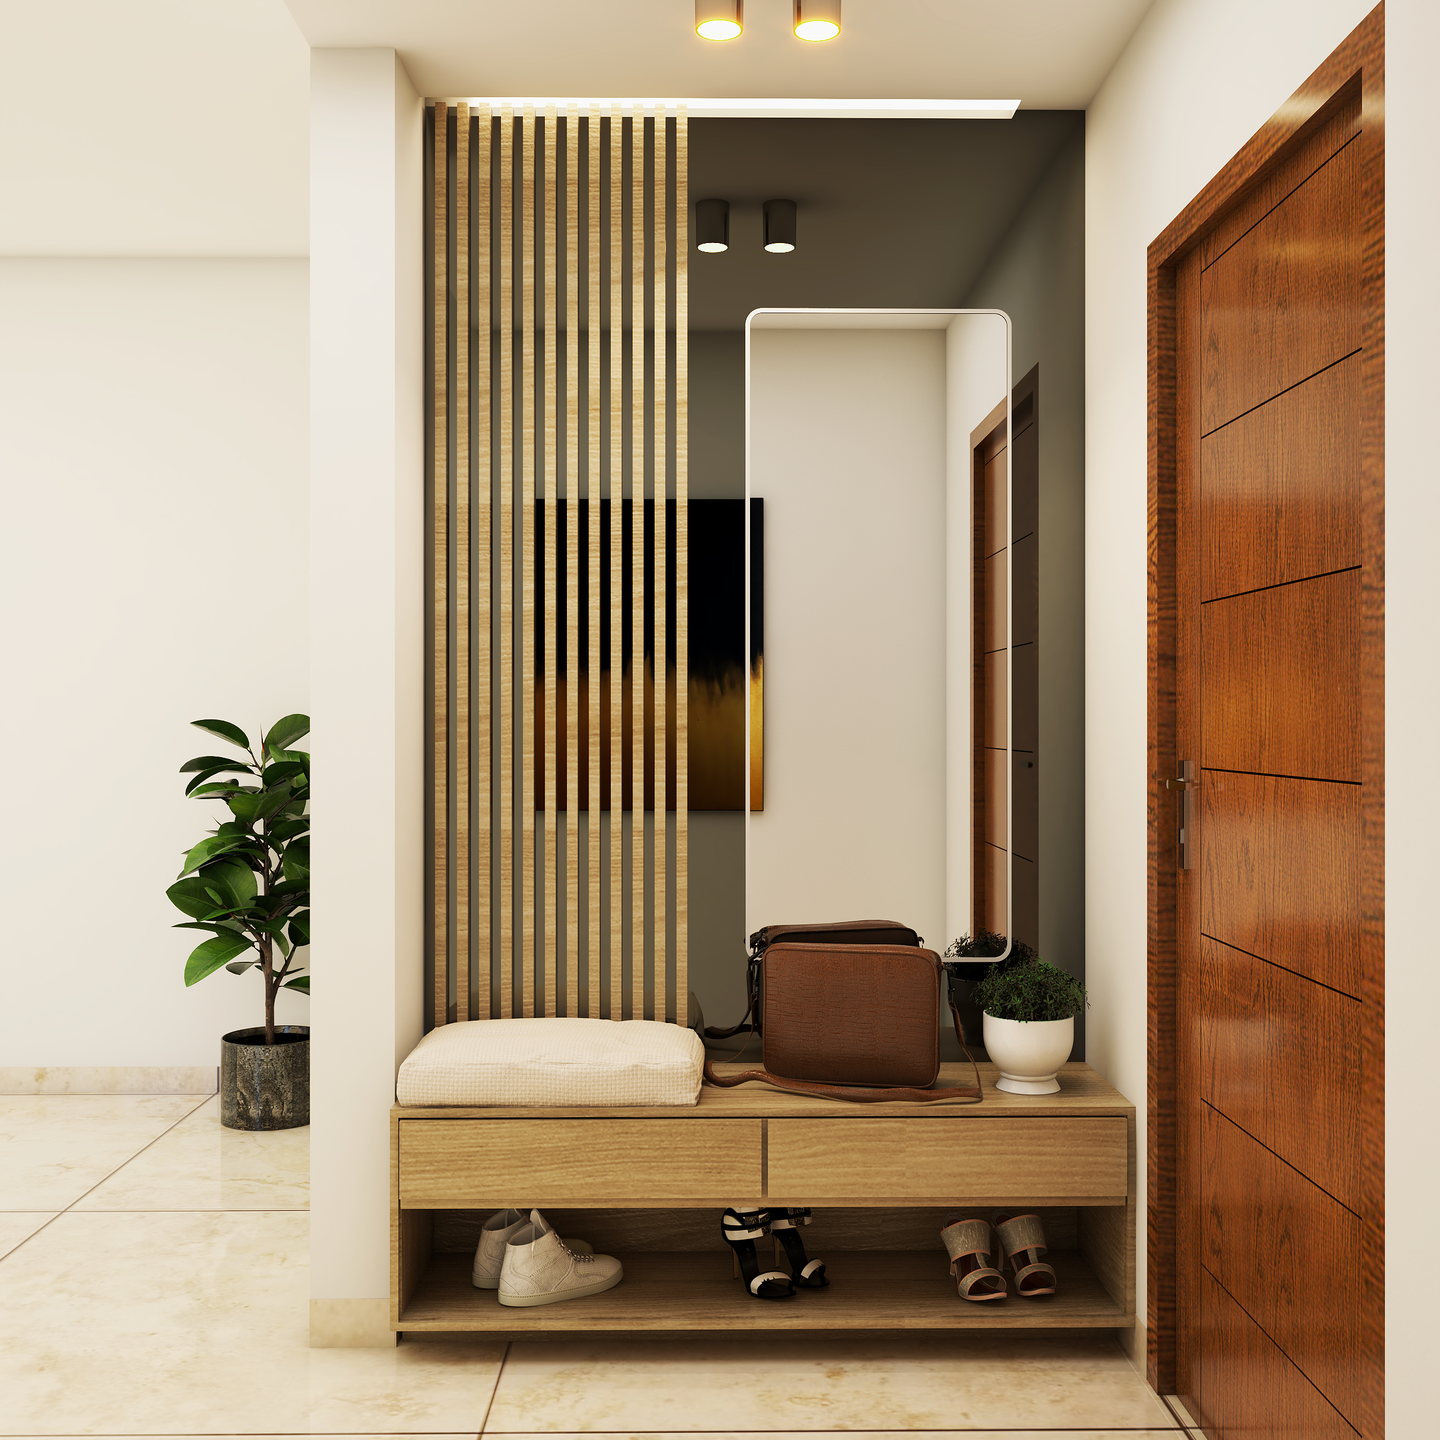 Rustic Foyer Design With Mirror - Livspace